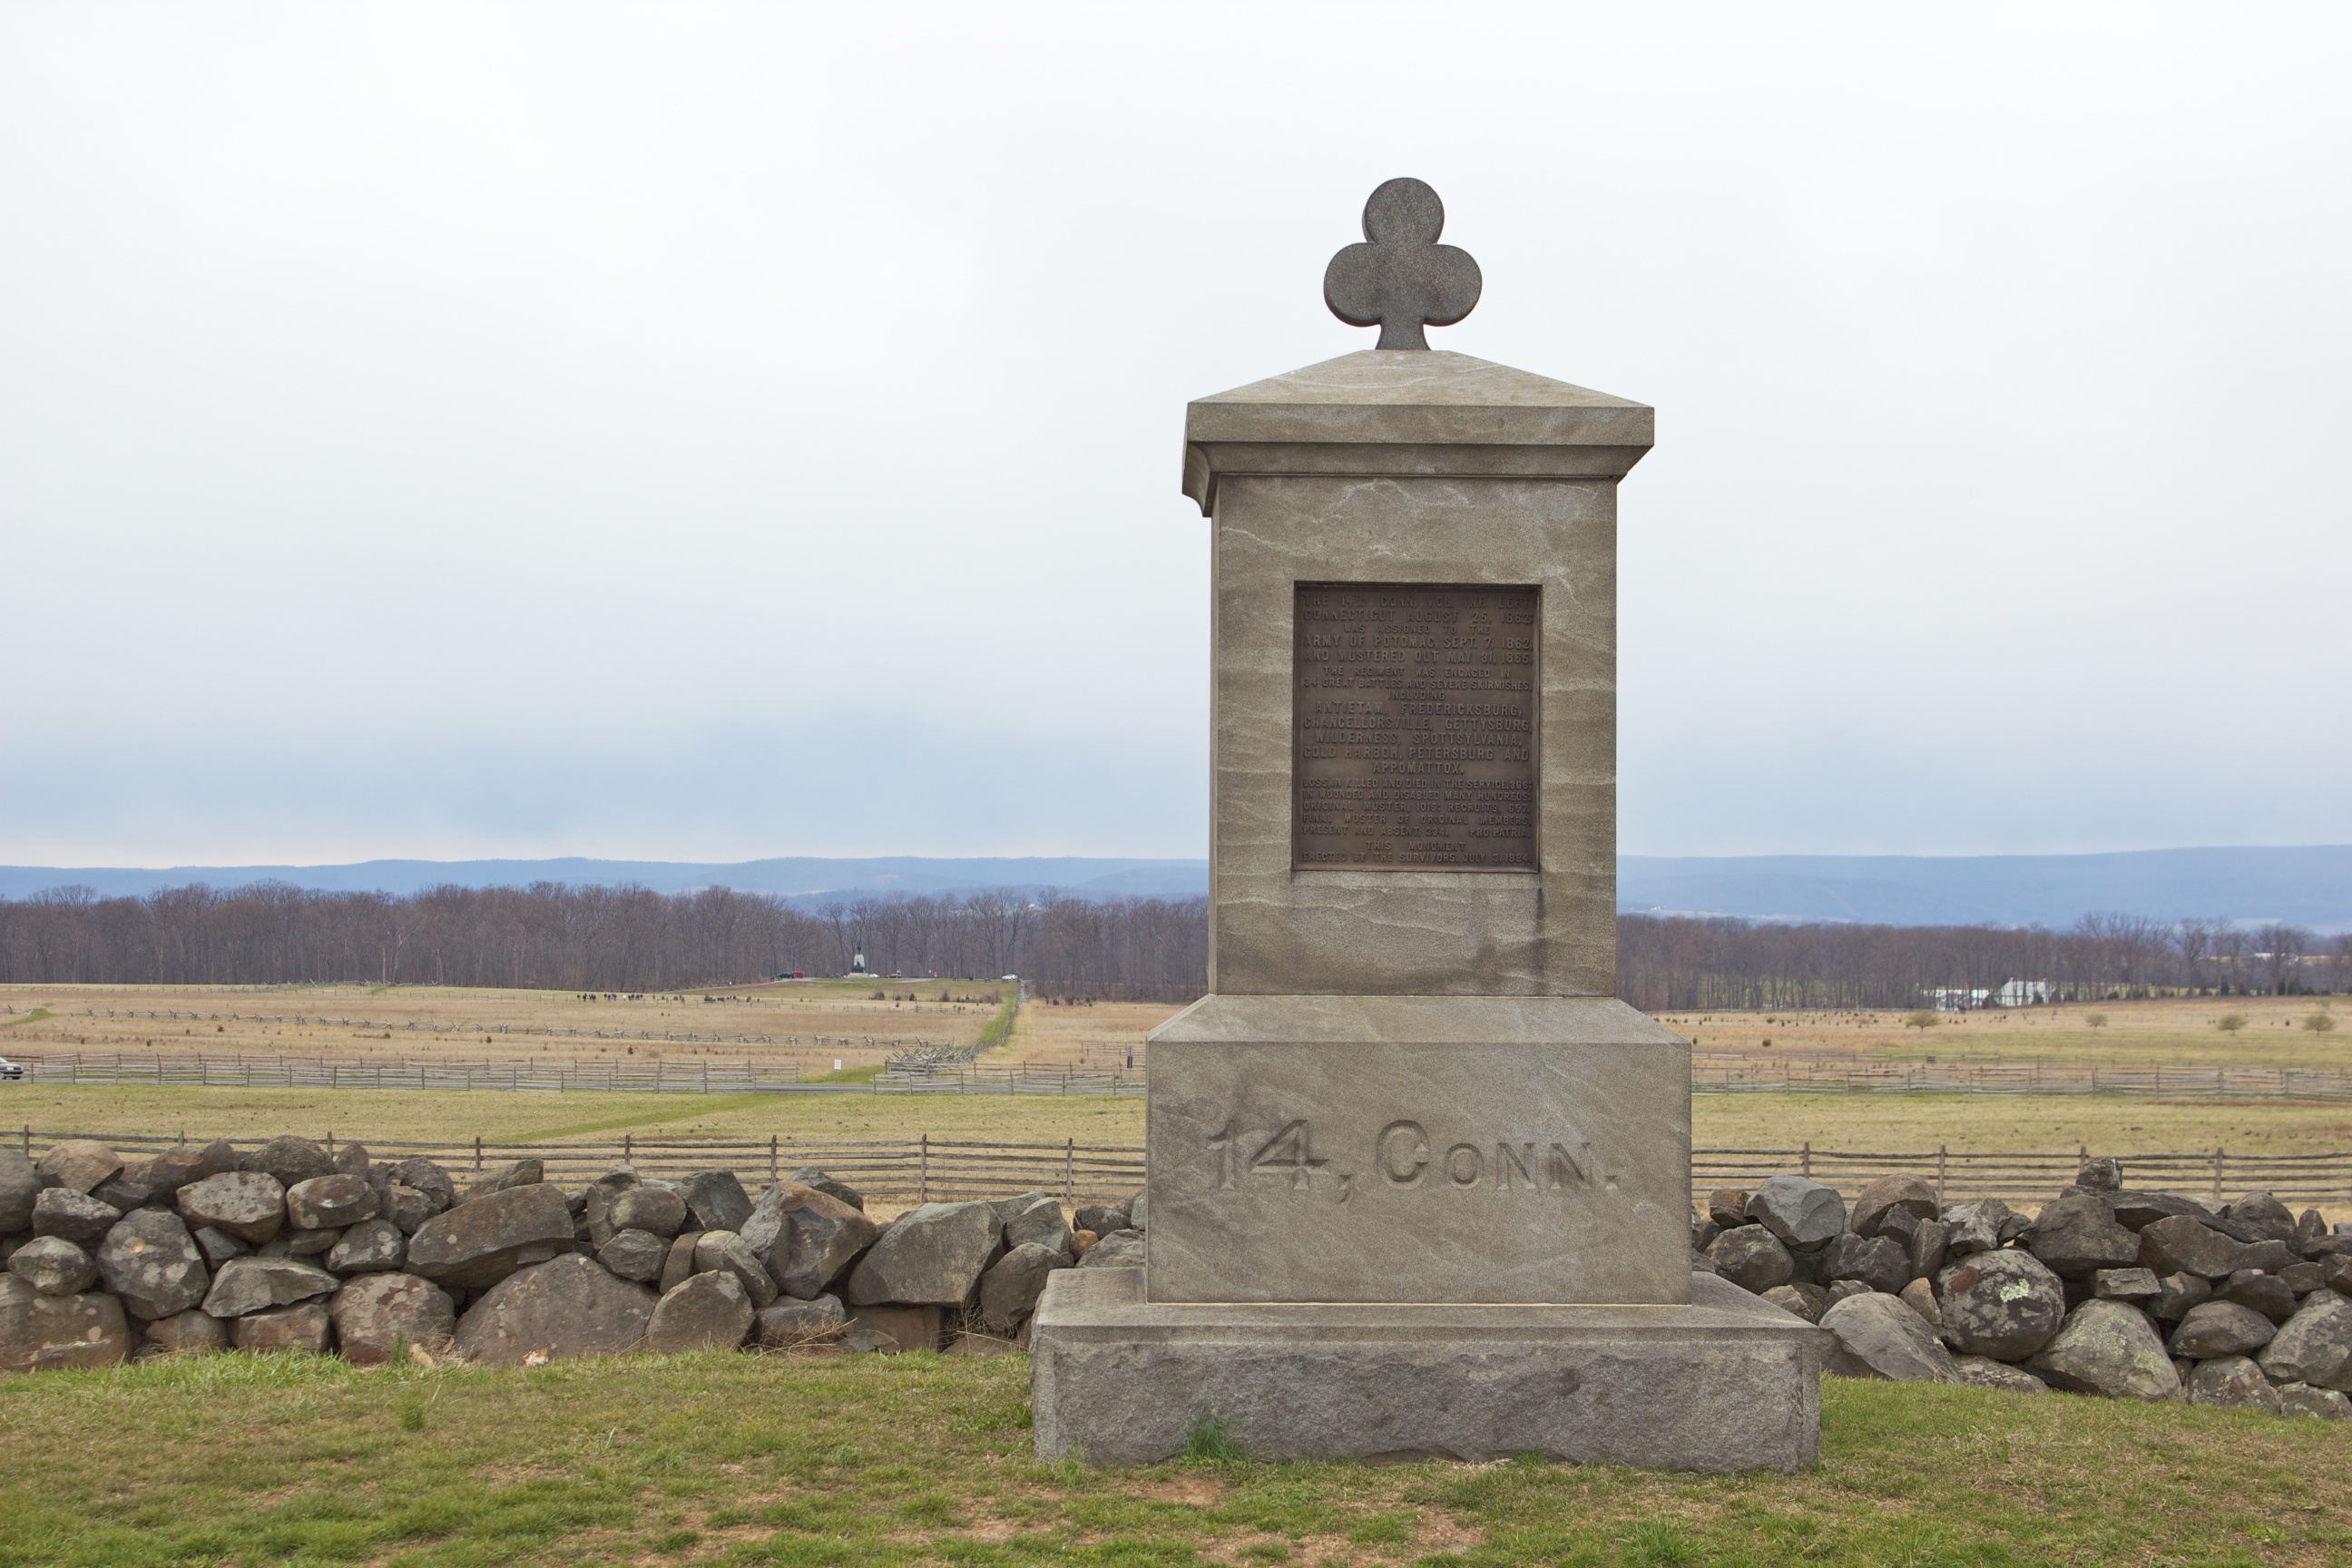 14th Connecticut Volunteer Infantry, Gettysburg | CT Monuments.net